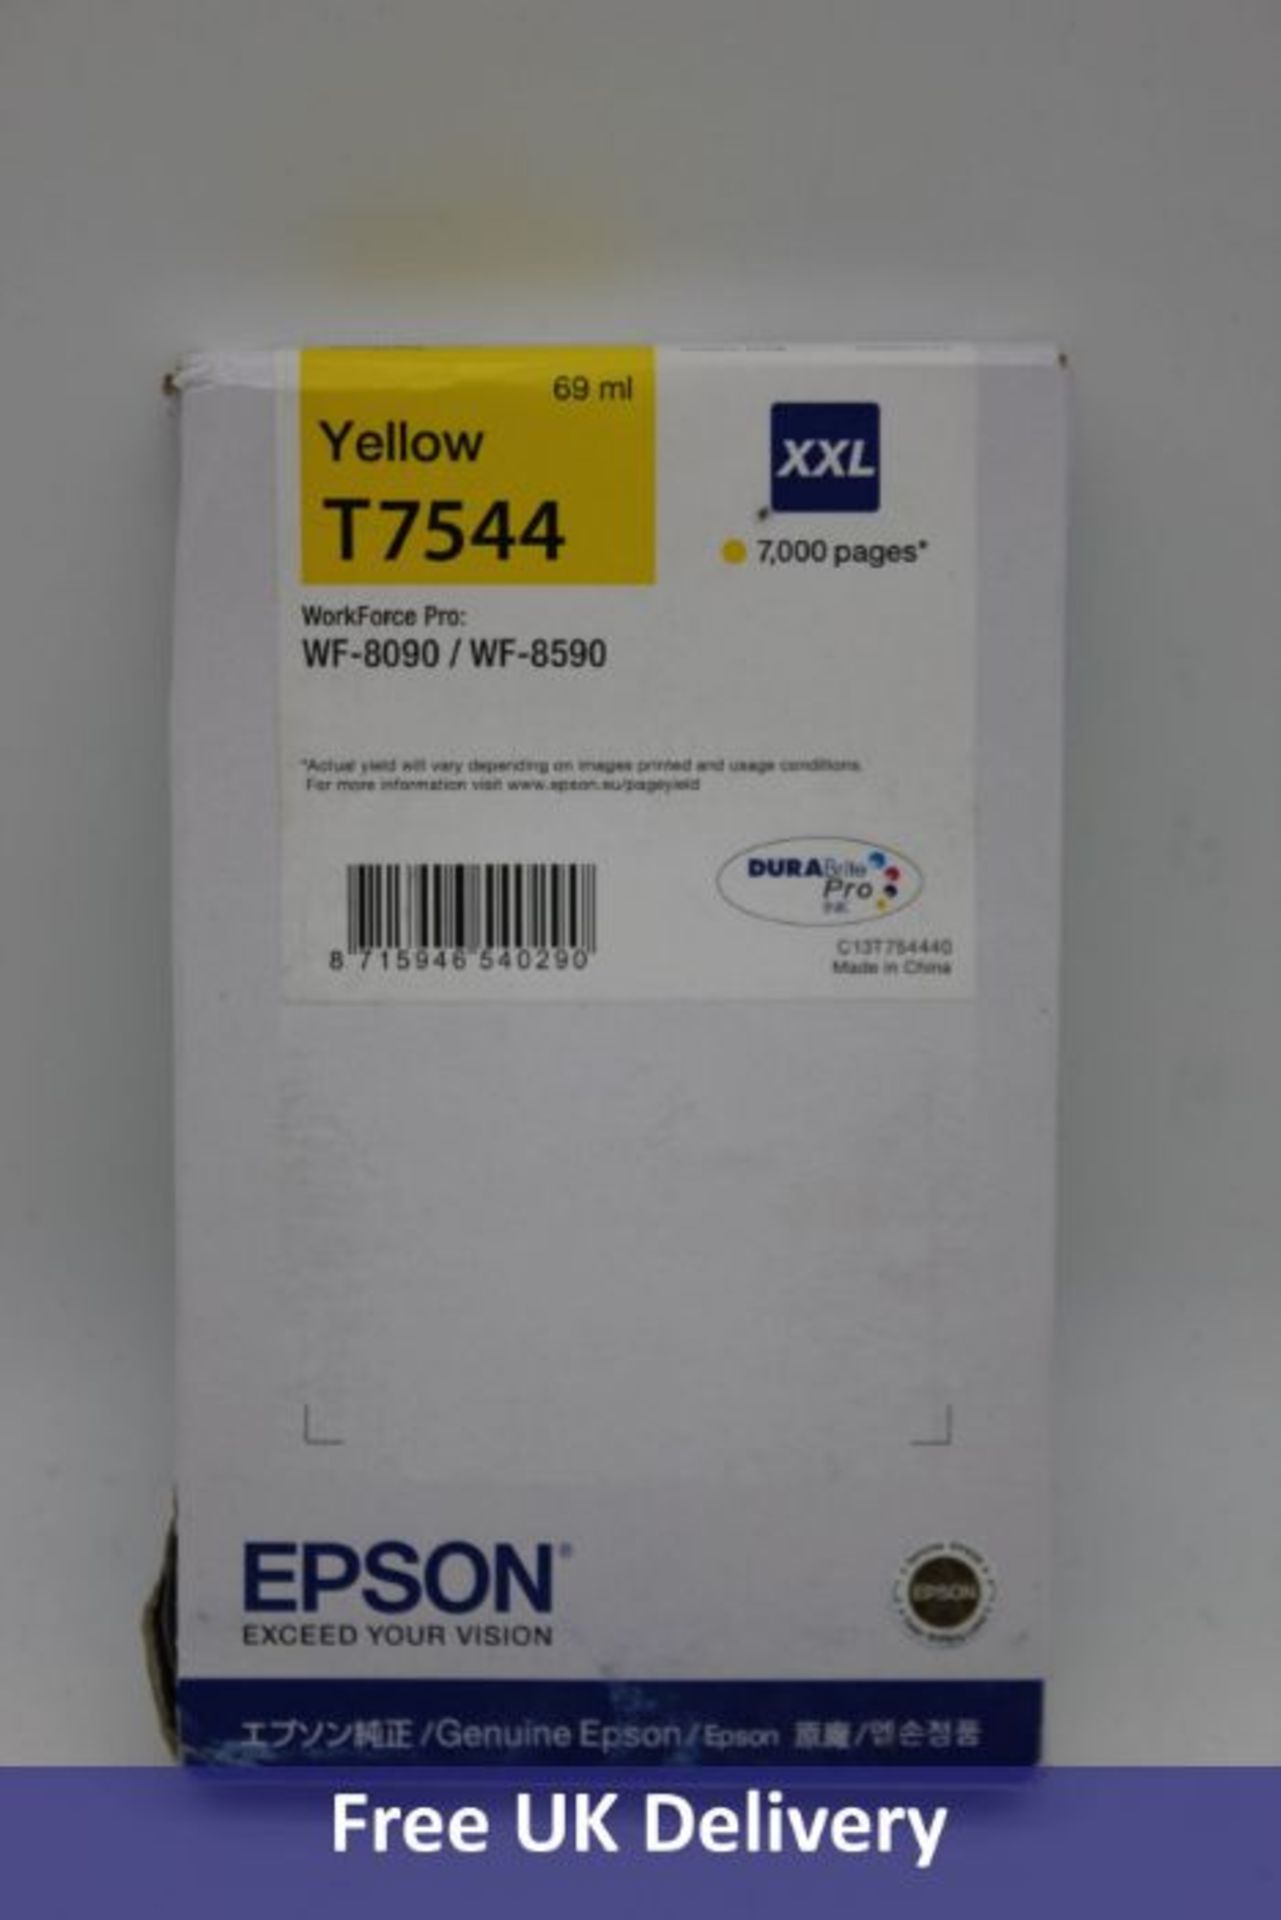 Epson Maintenance Box For WF-8000 Series and 1x XXL Yellow Inkjet Cartridge - Image 2 of 2